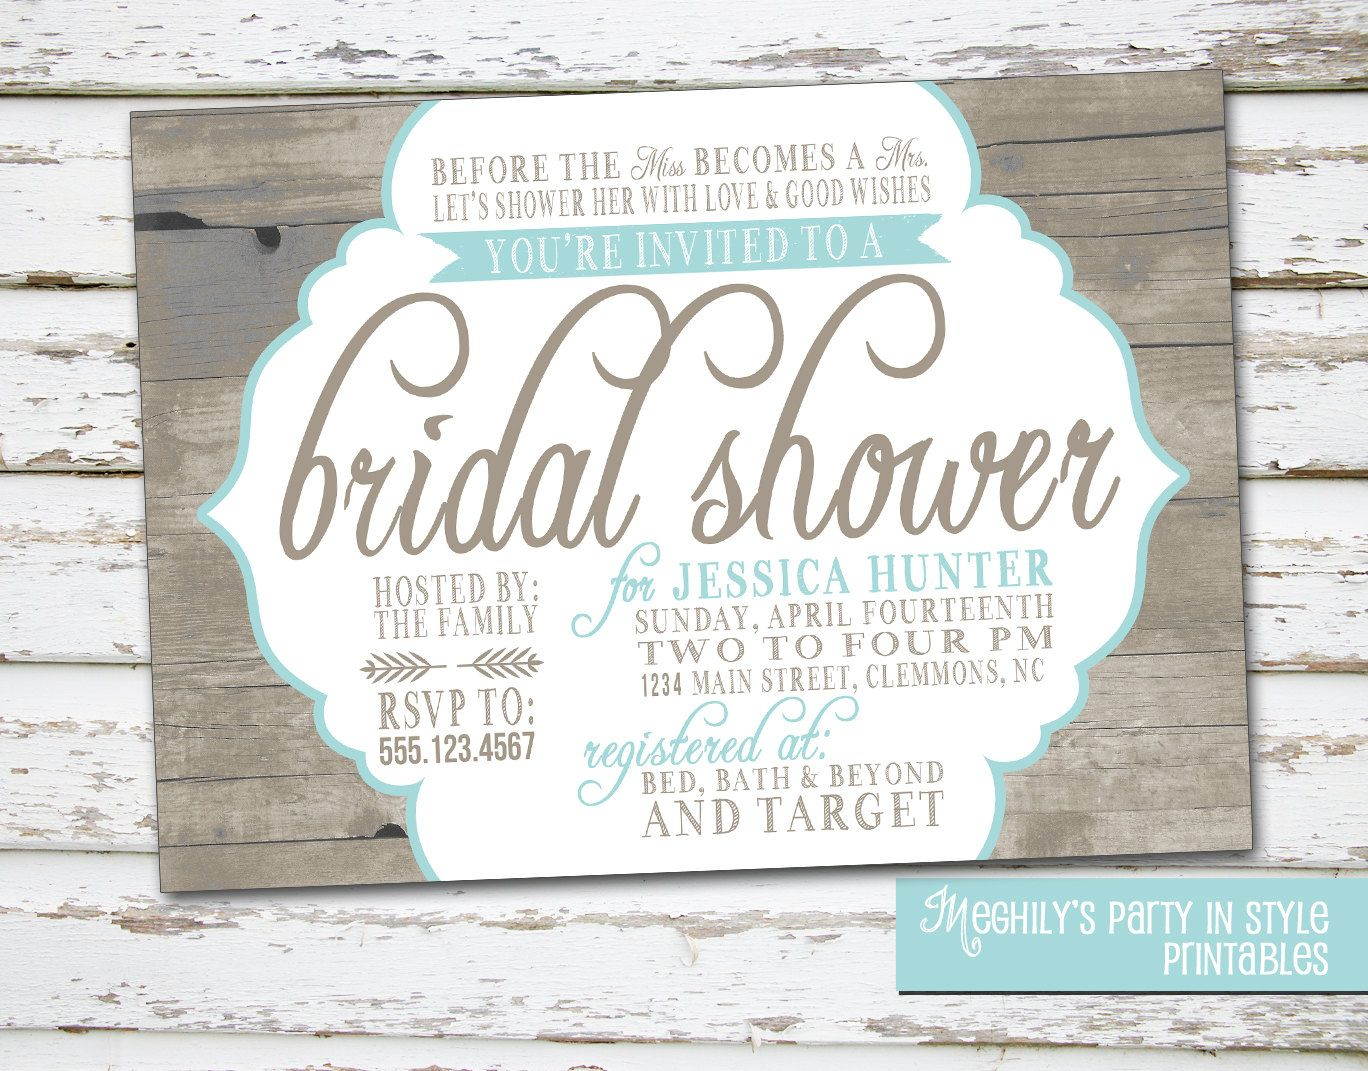 Rustic Wedding Shower Invitations Rustic Country Wedding Shower Ideas Country Rustic Theme Bridal